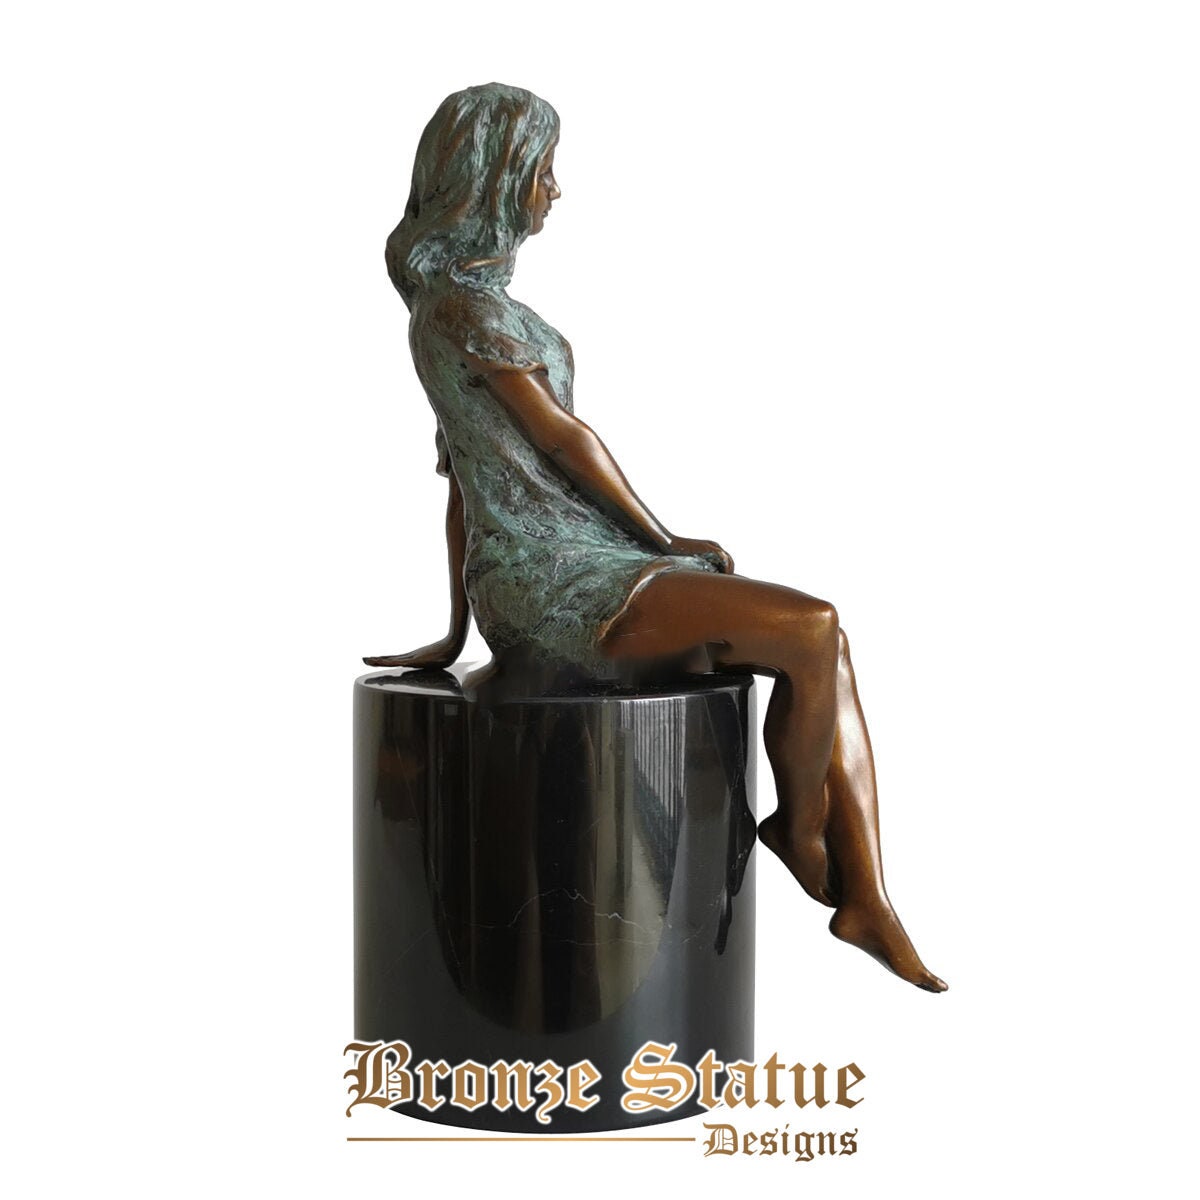 Bare sitting sexy woman statue bronze western female sculpture erotic nude woman modern art